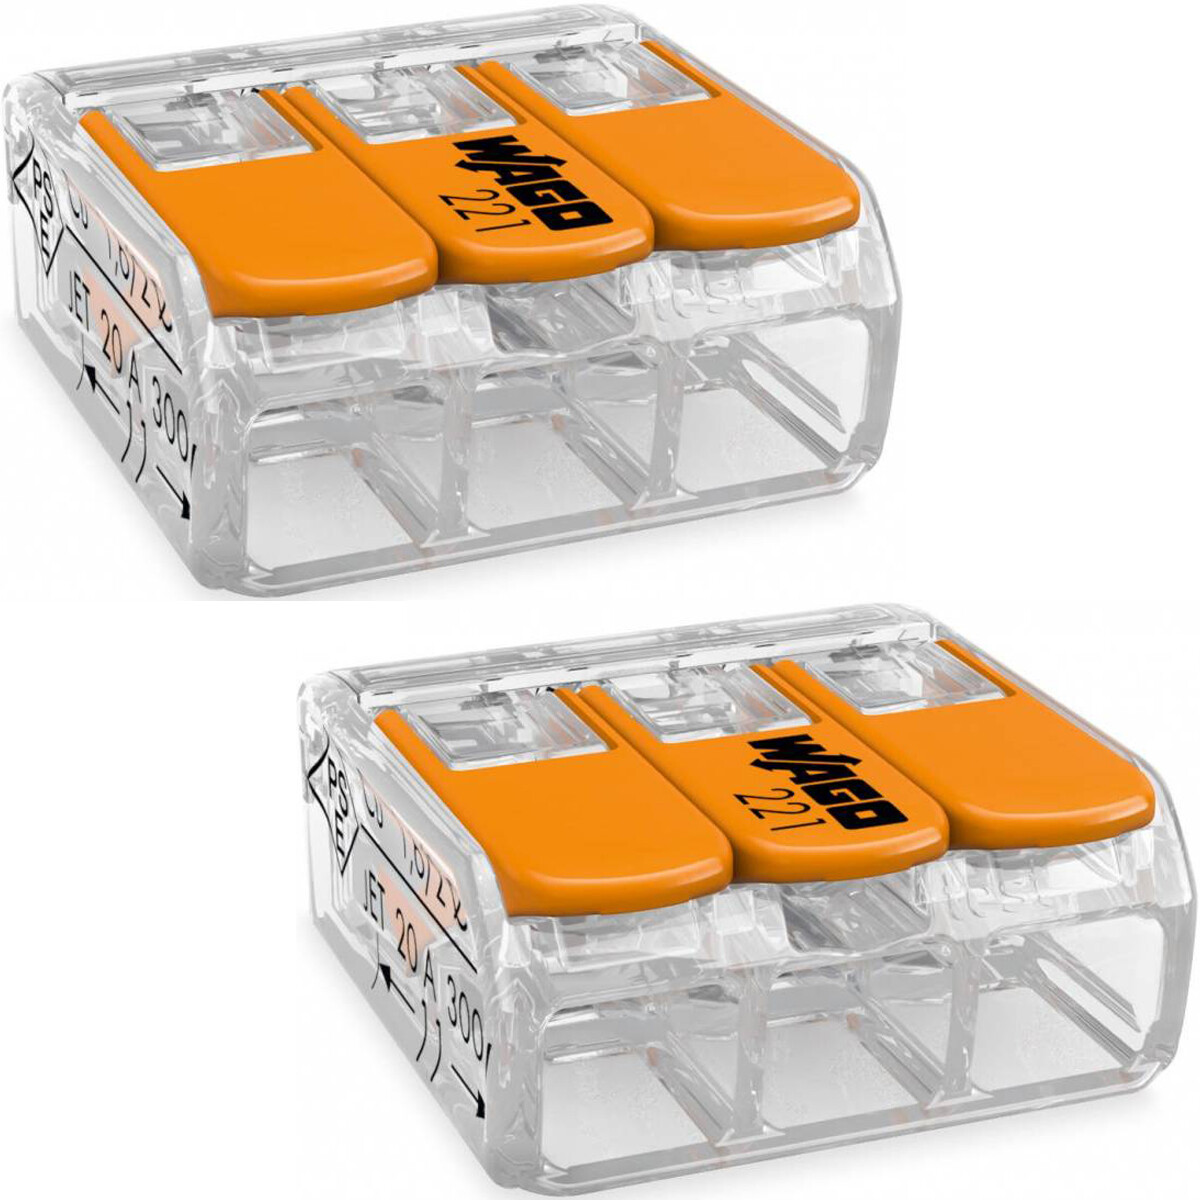 WAGO - Lasklem Set 2 Stuks - 3 Polig met Klemmetjes - Oranje product afbeelding